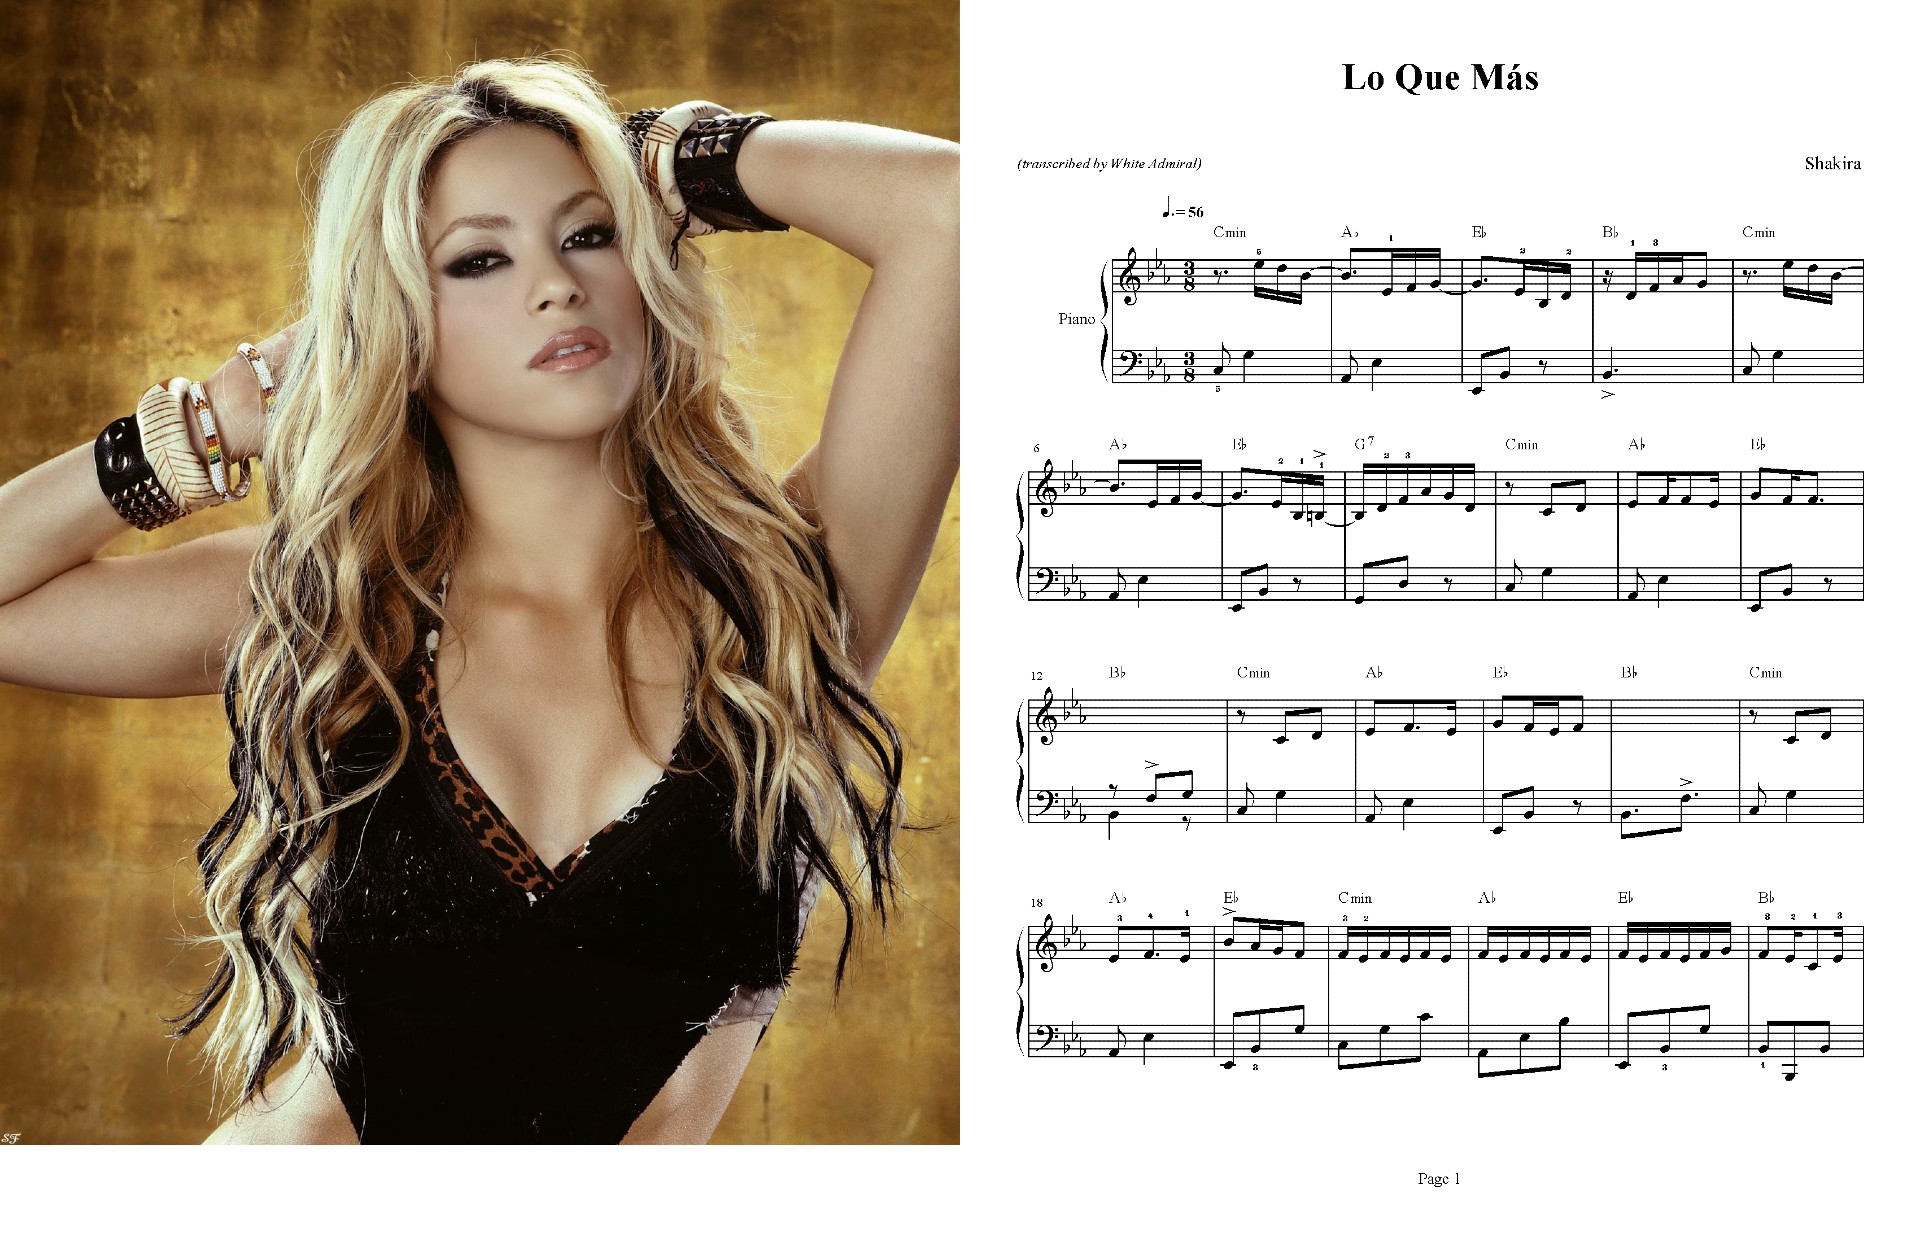 Lo Que Mas - Shakira.jpg